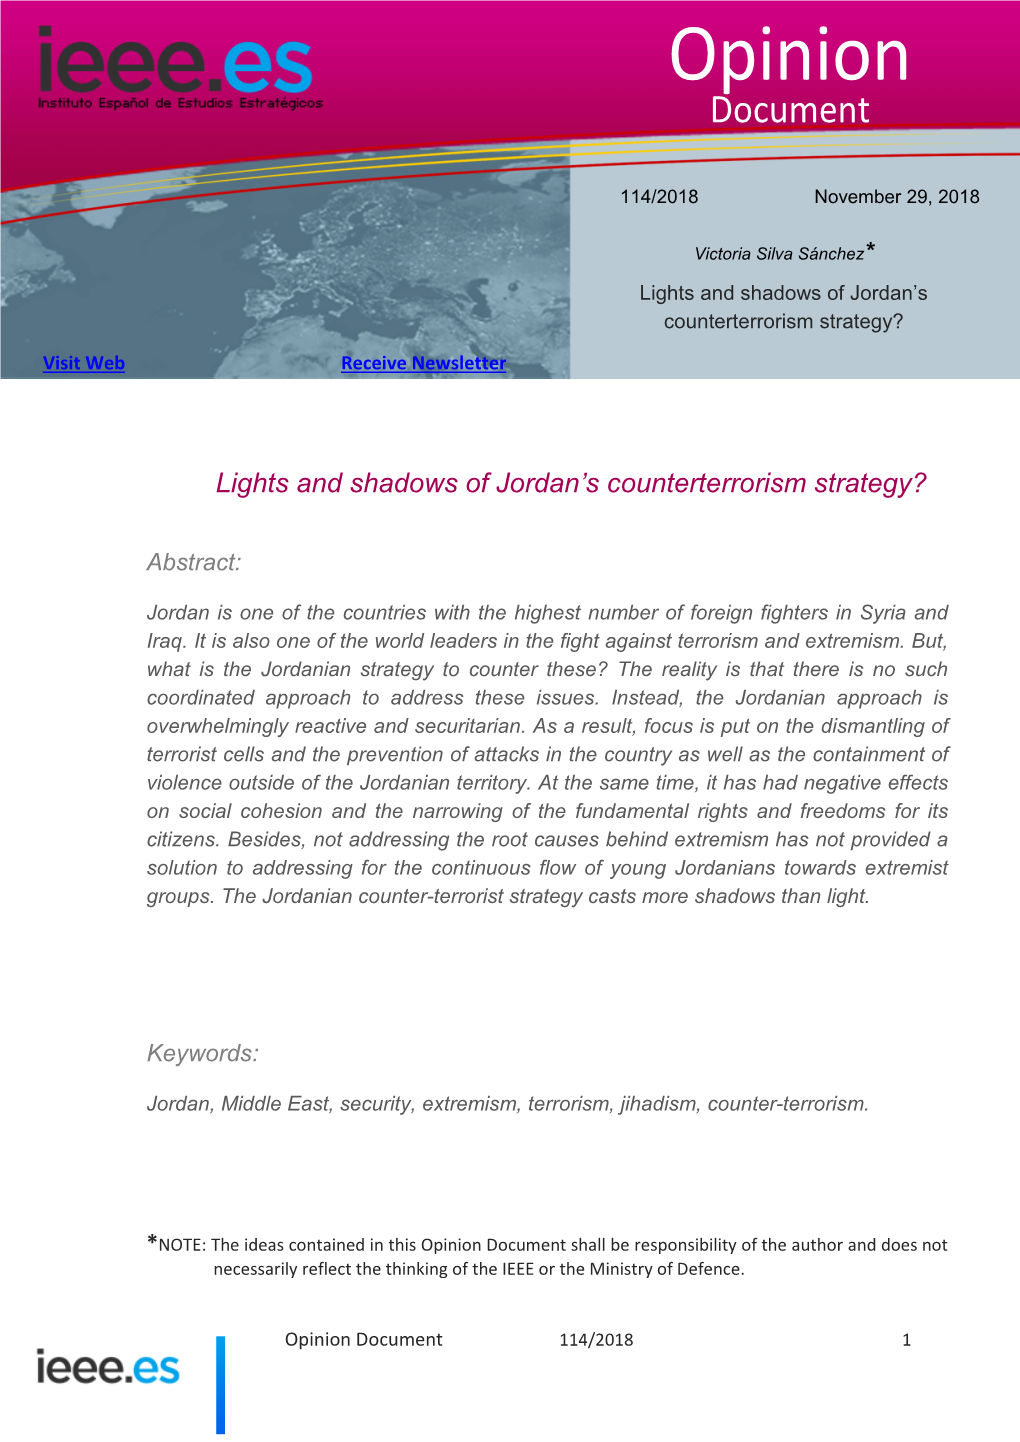 Lights and Shadows of Jordan's Counterterrorism Strategy?